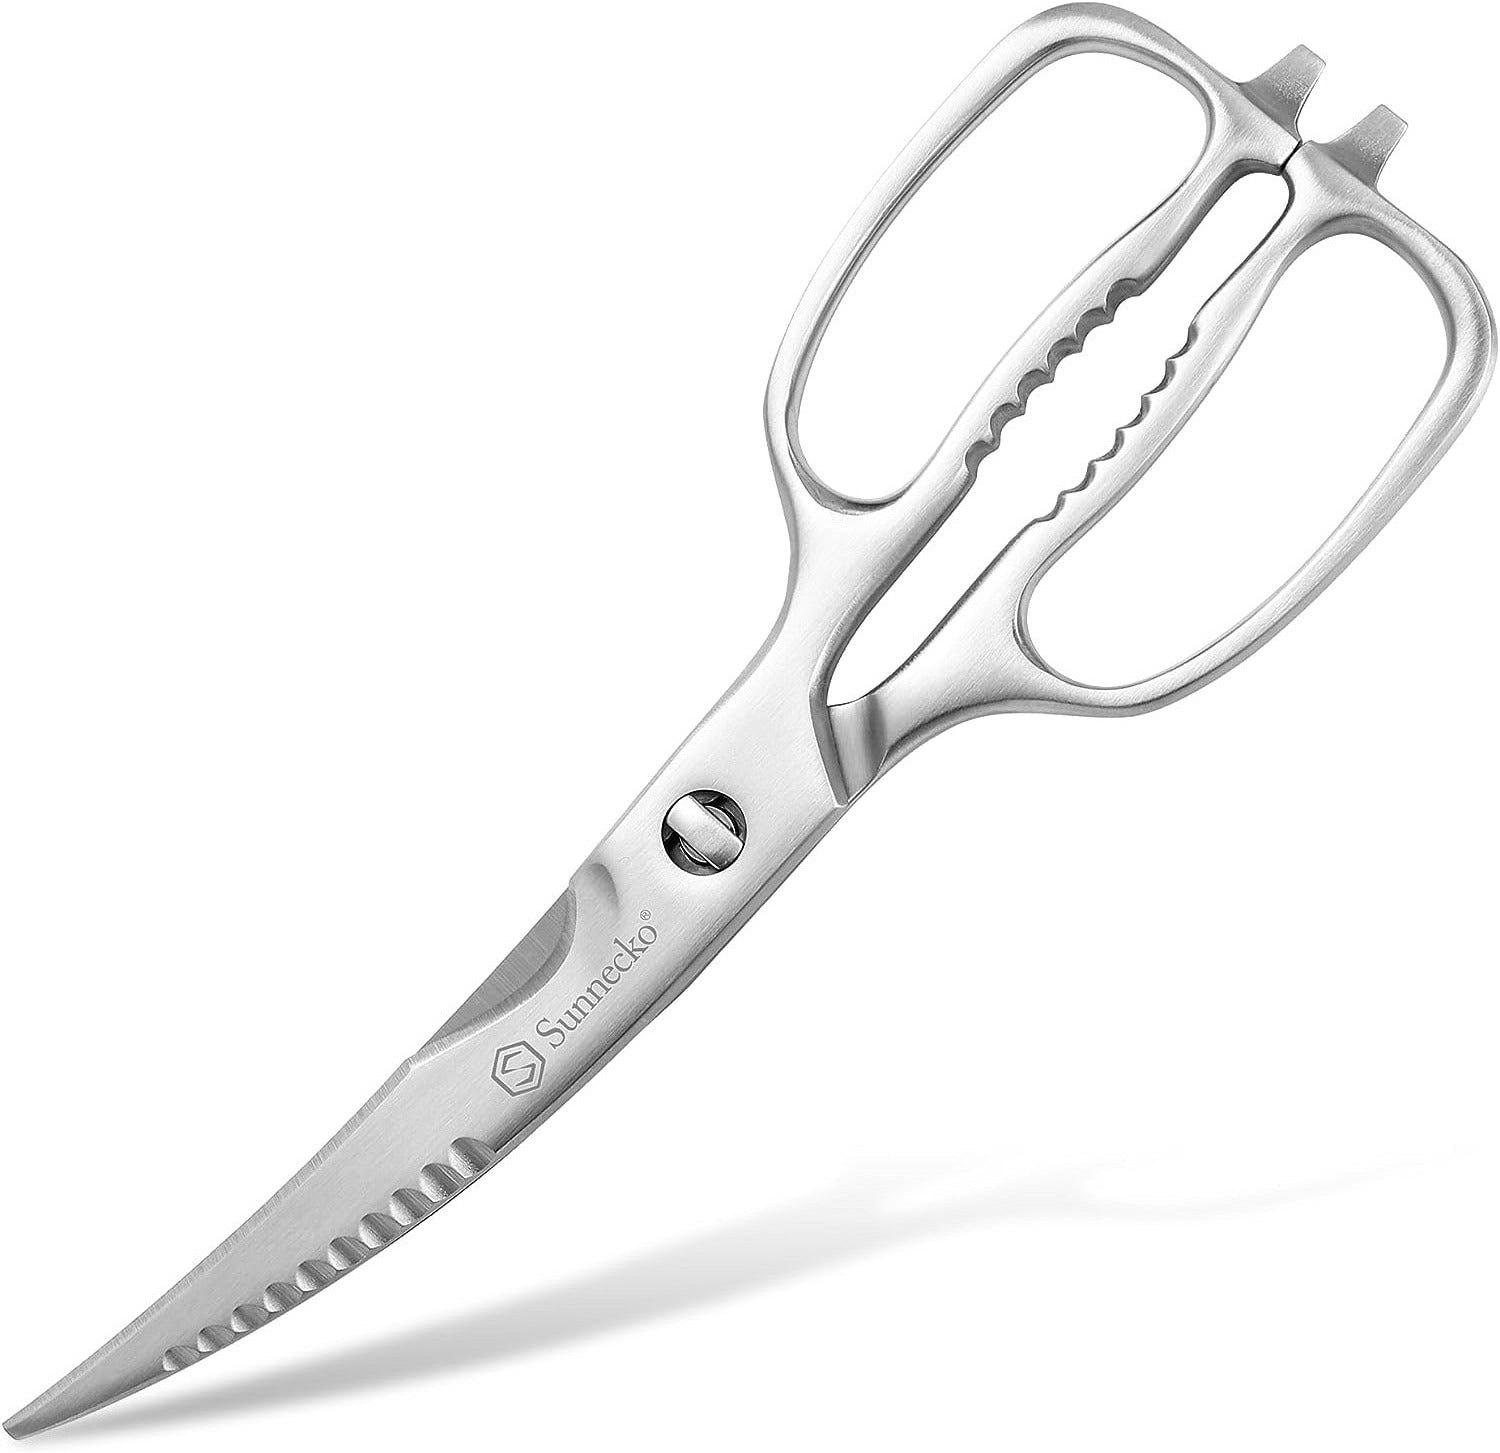 Mult-functional Kitchen Scissors】Heavy Duty Kitchen Shears for